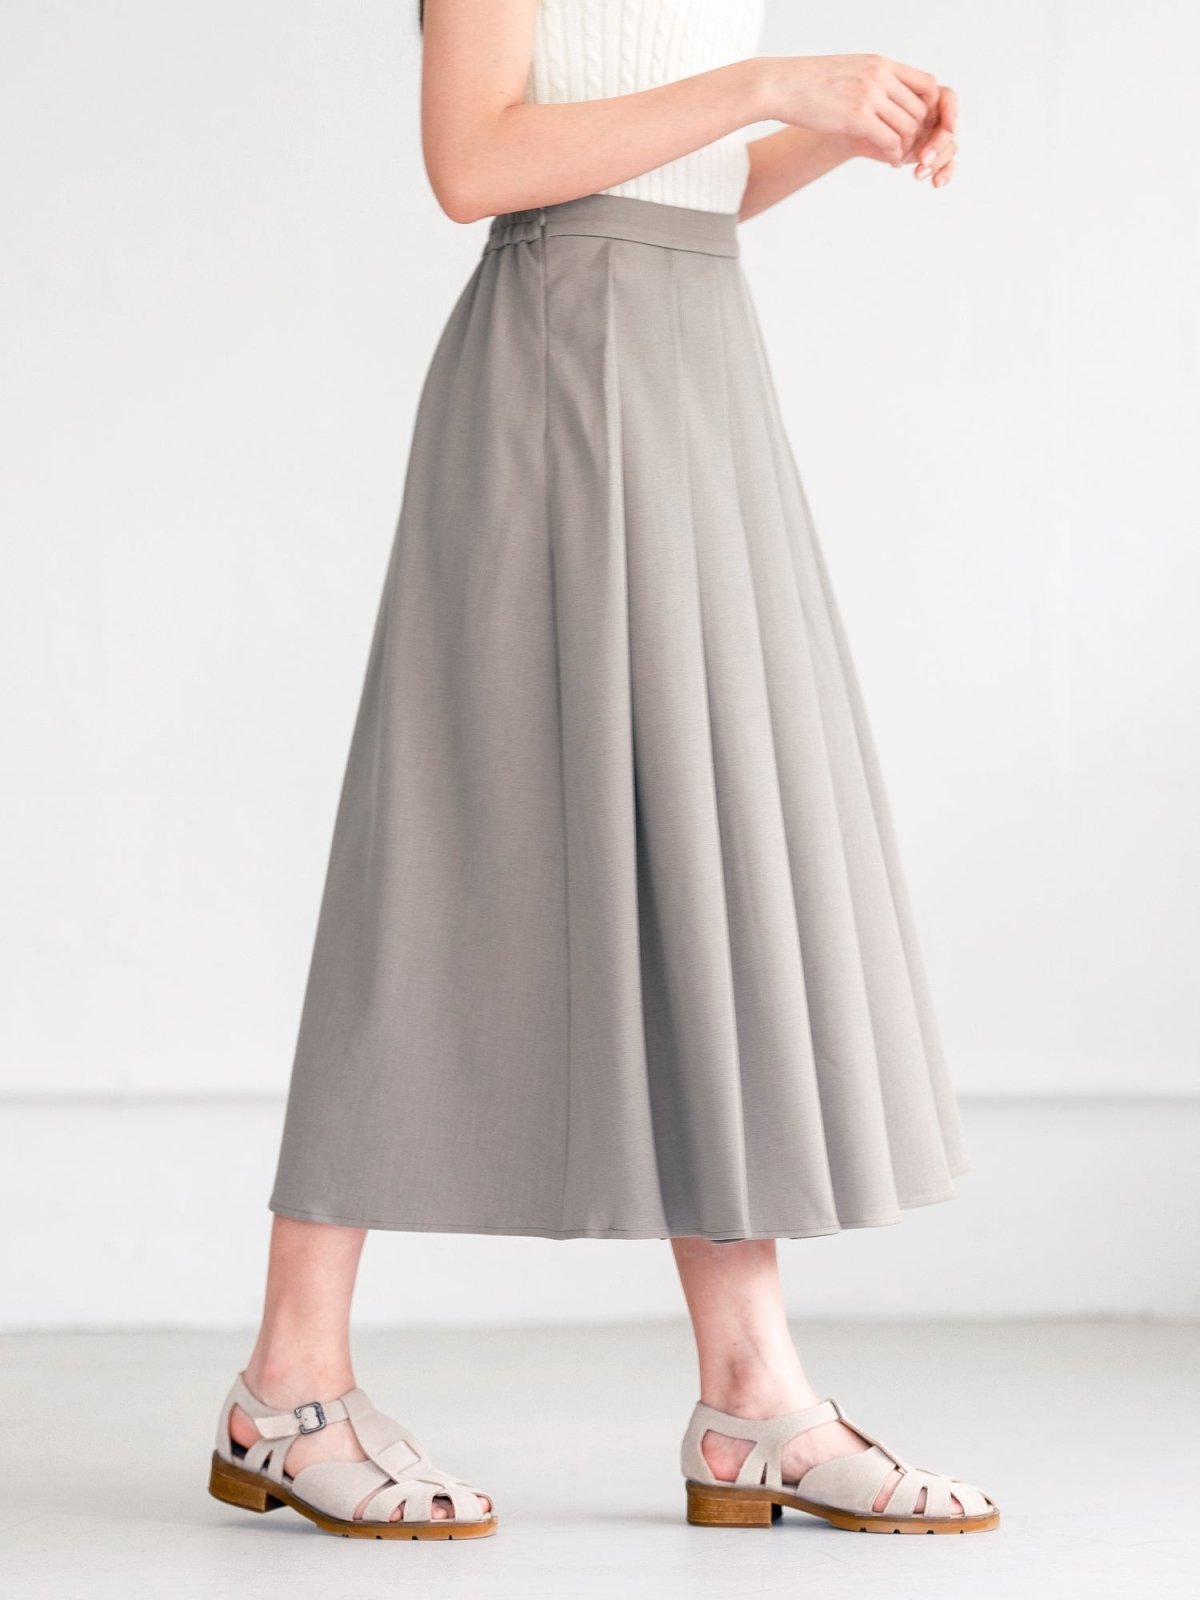 Elia Elastic-back Flowy Pleated Skirt - DAG-G-220154GREYS - Khaki Gray - S - D'ZAGE Designs